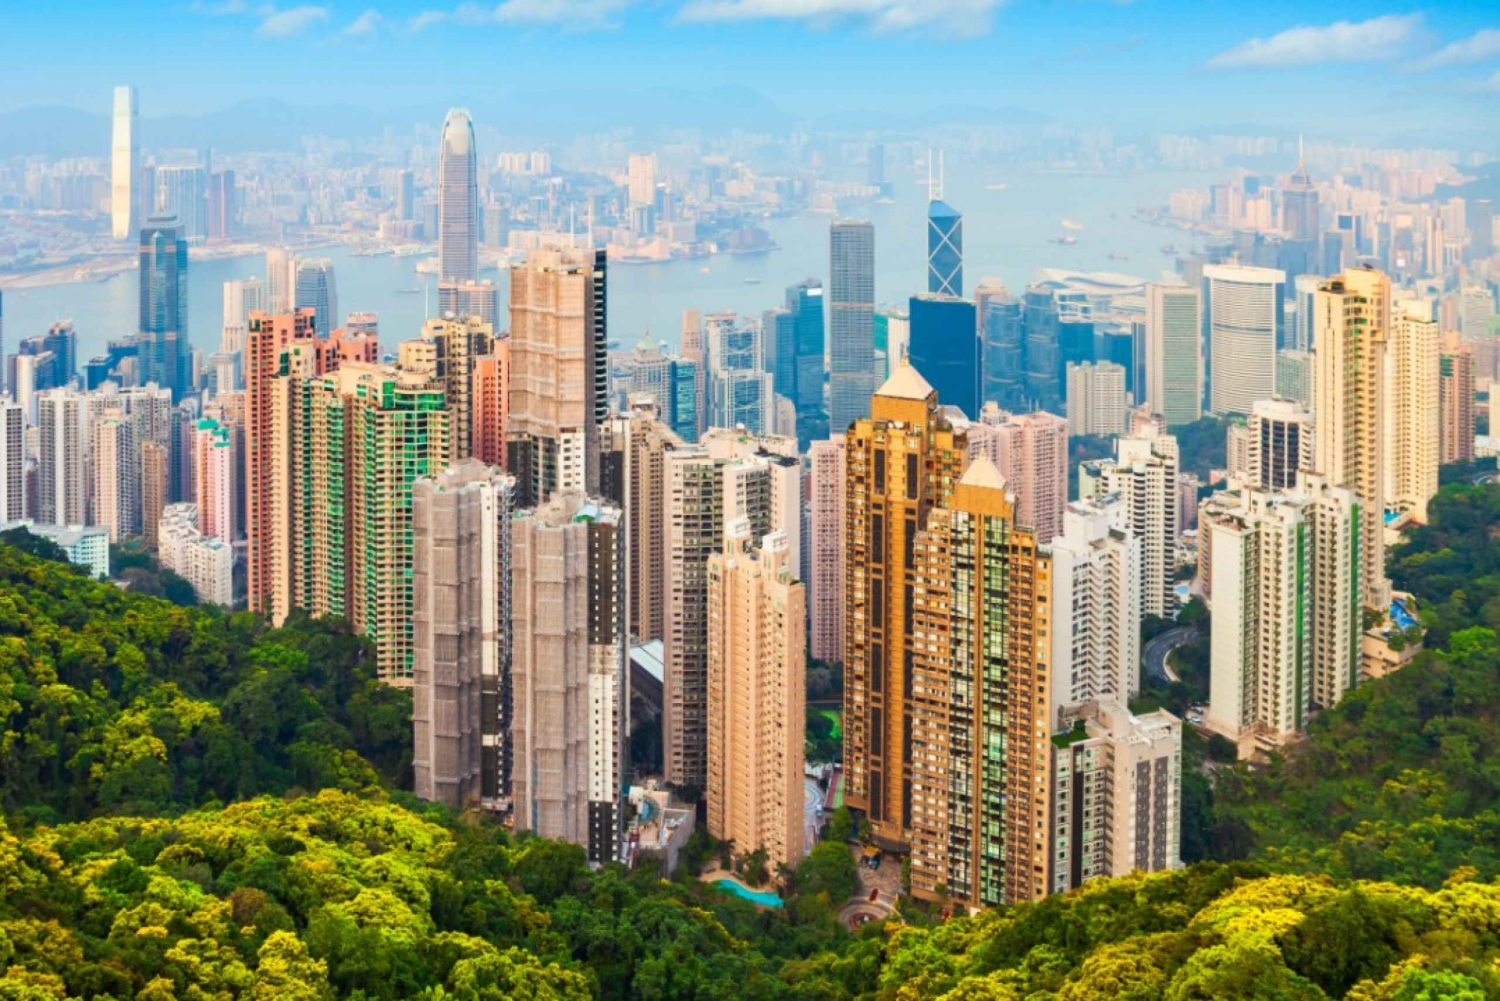 Hong Kong: Victoria Peak Unveiled Autoguiado Audioguía